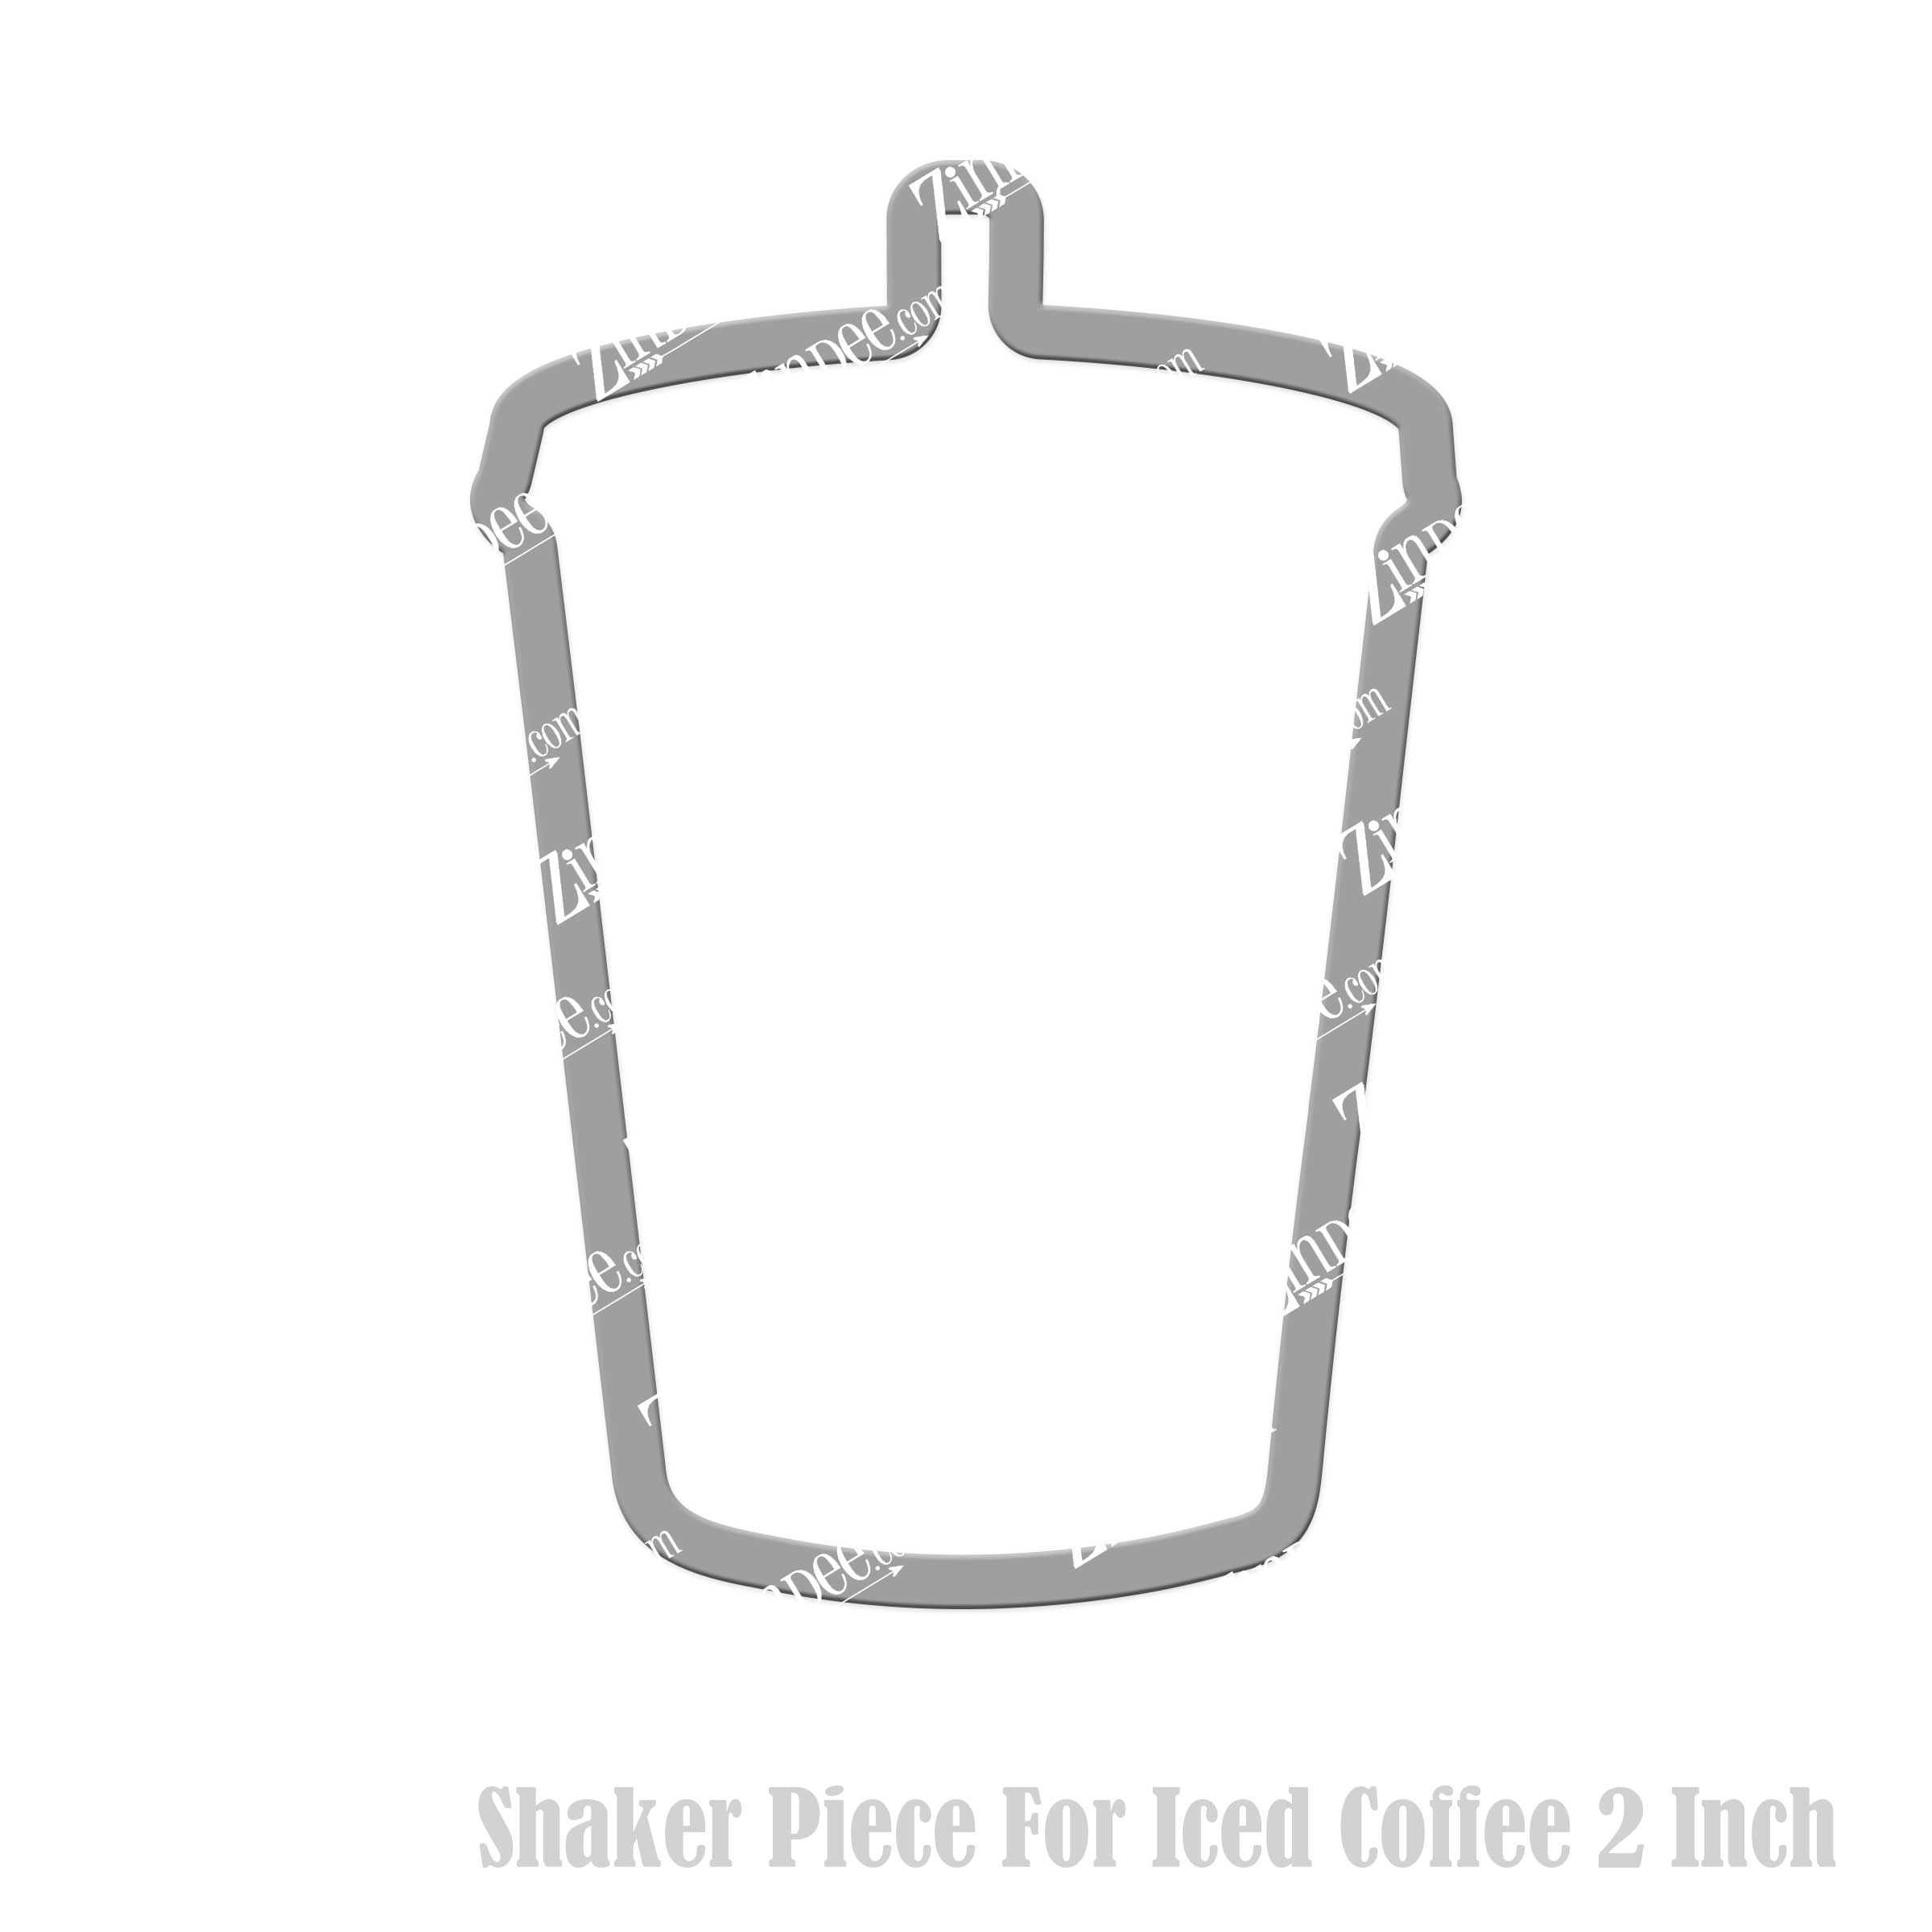 Iced Coffee Shaker Piece (2 inch) –